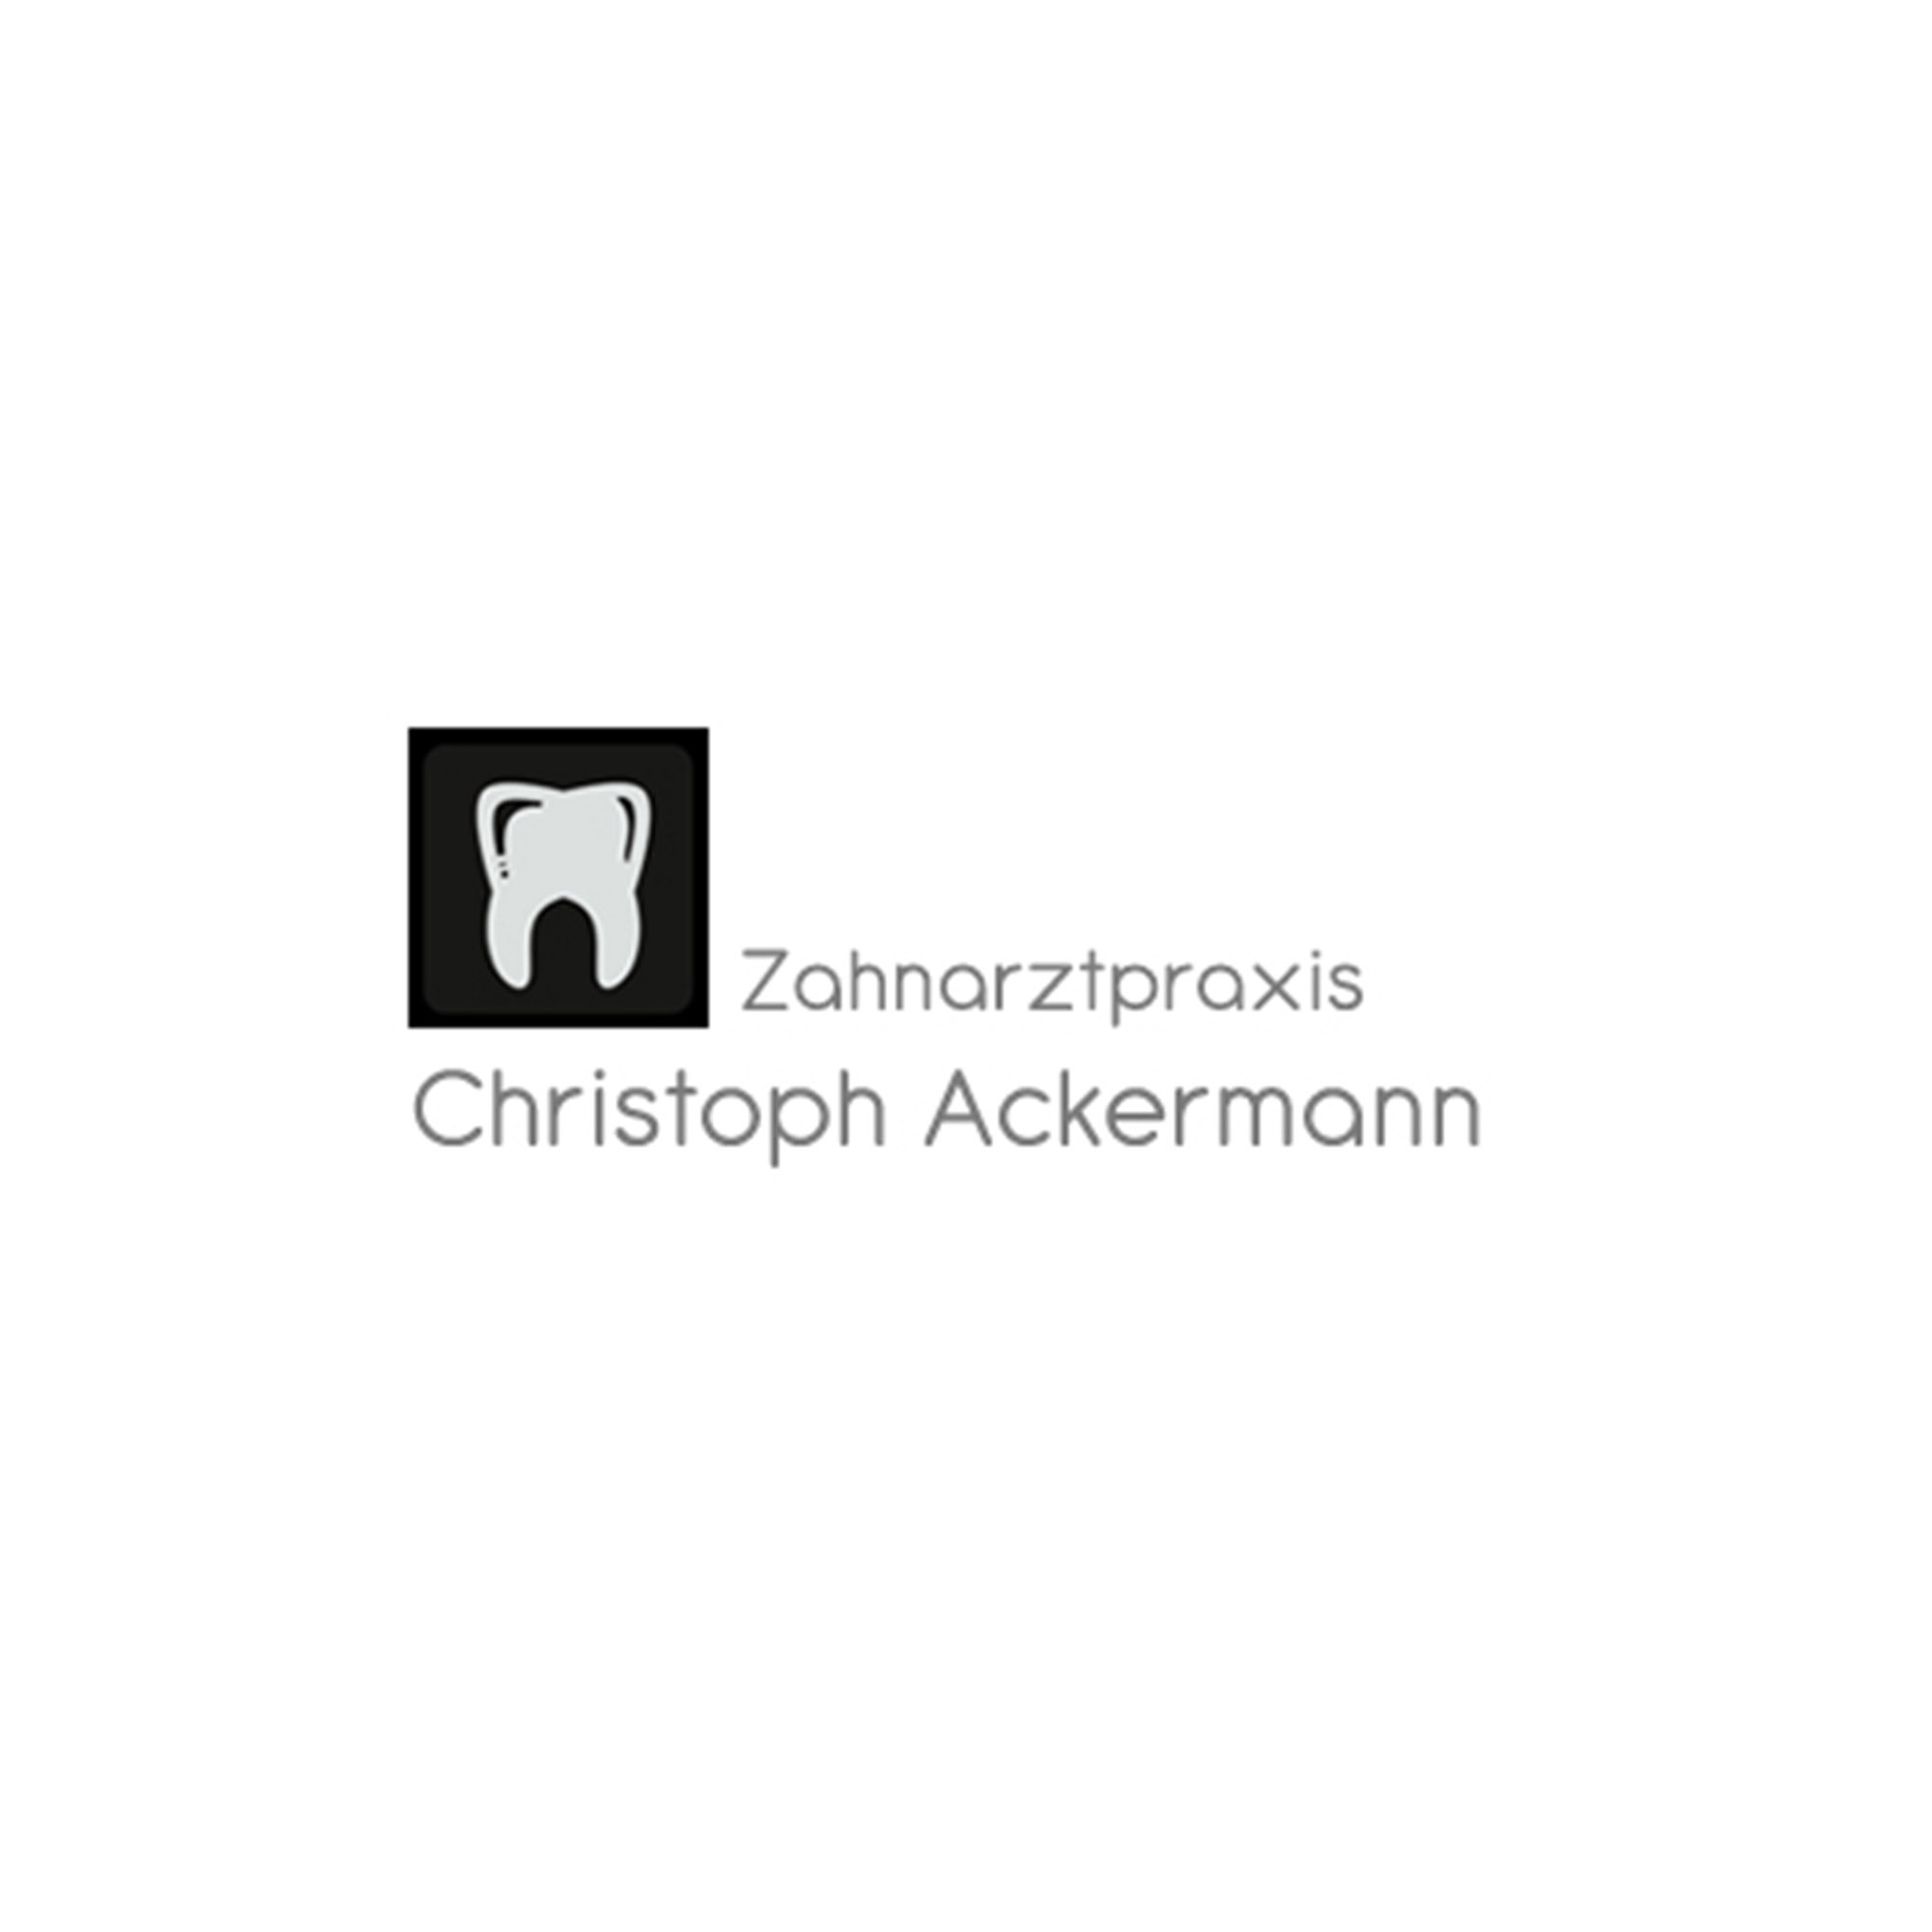 Zahnarzt Christoph Ackermann in Xanten - Logo